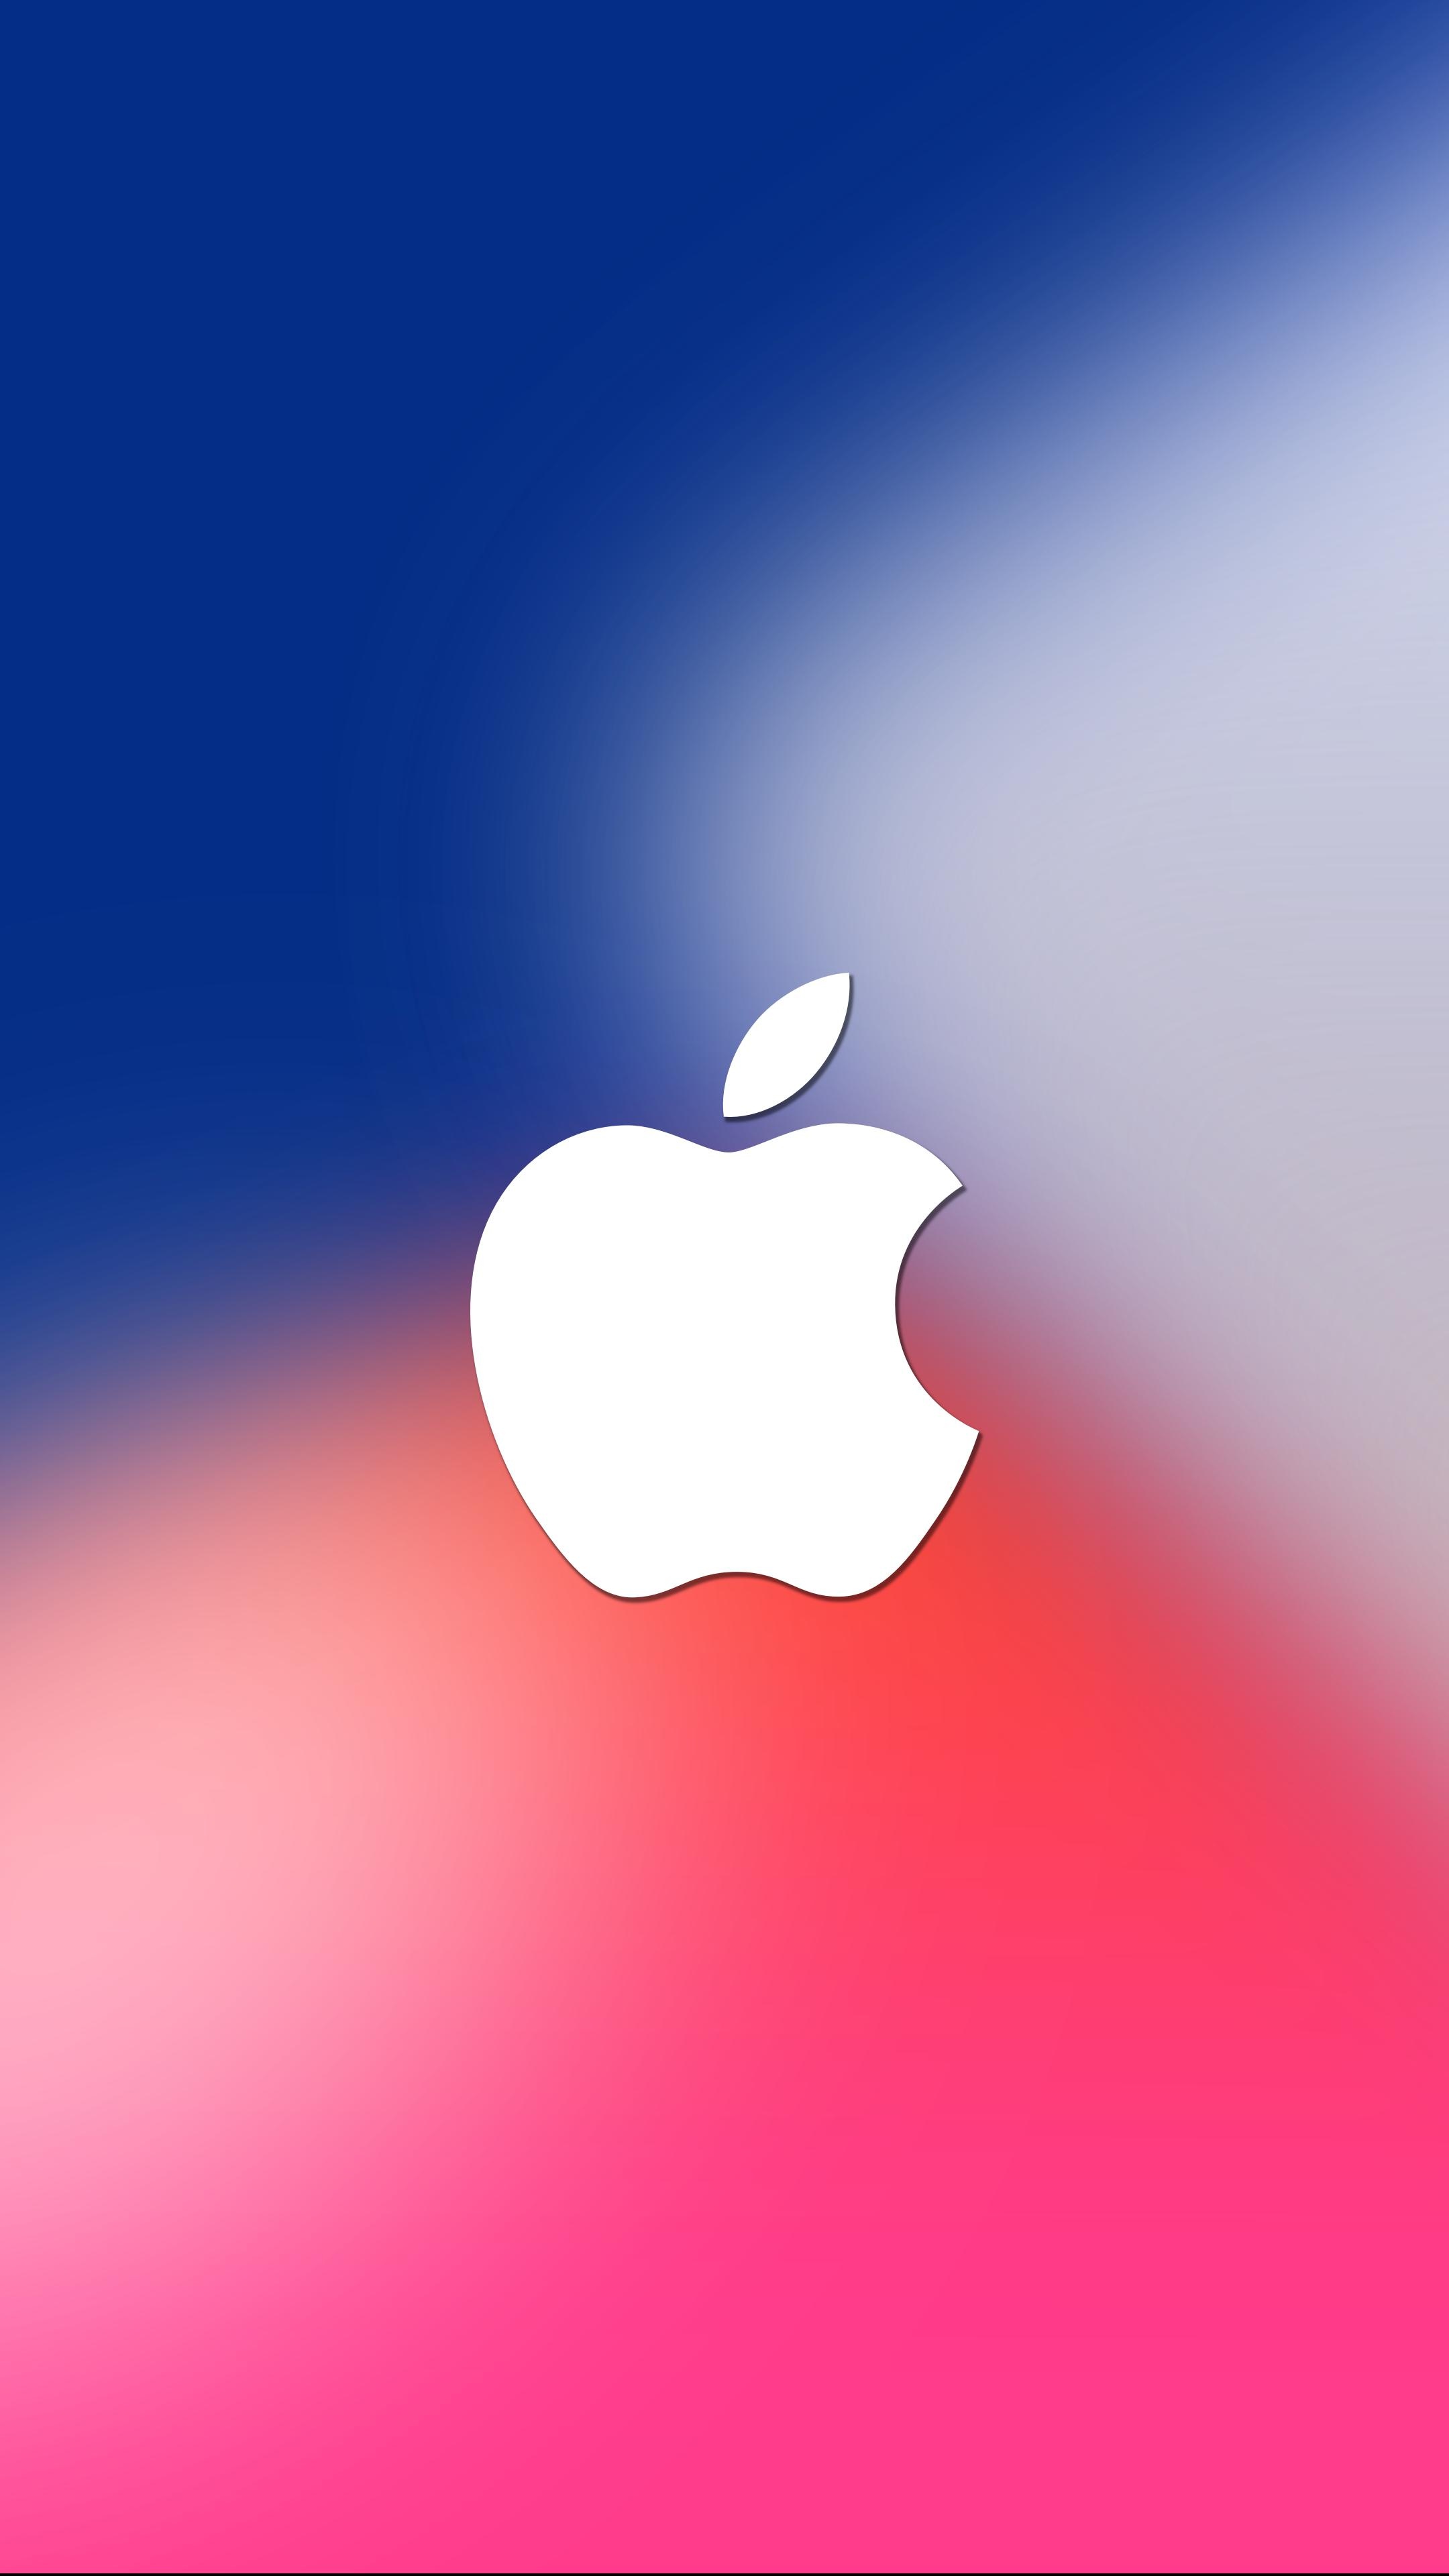 iMac Logo, High-resolution visuals, Apple brand recognition, Stunning graphics, 2160x3840 4K Phone